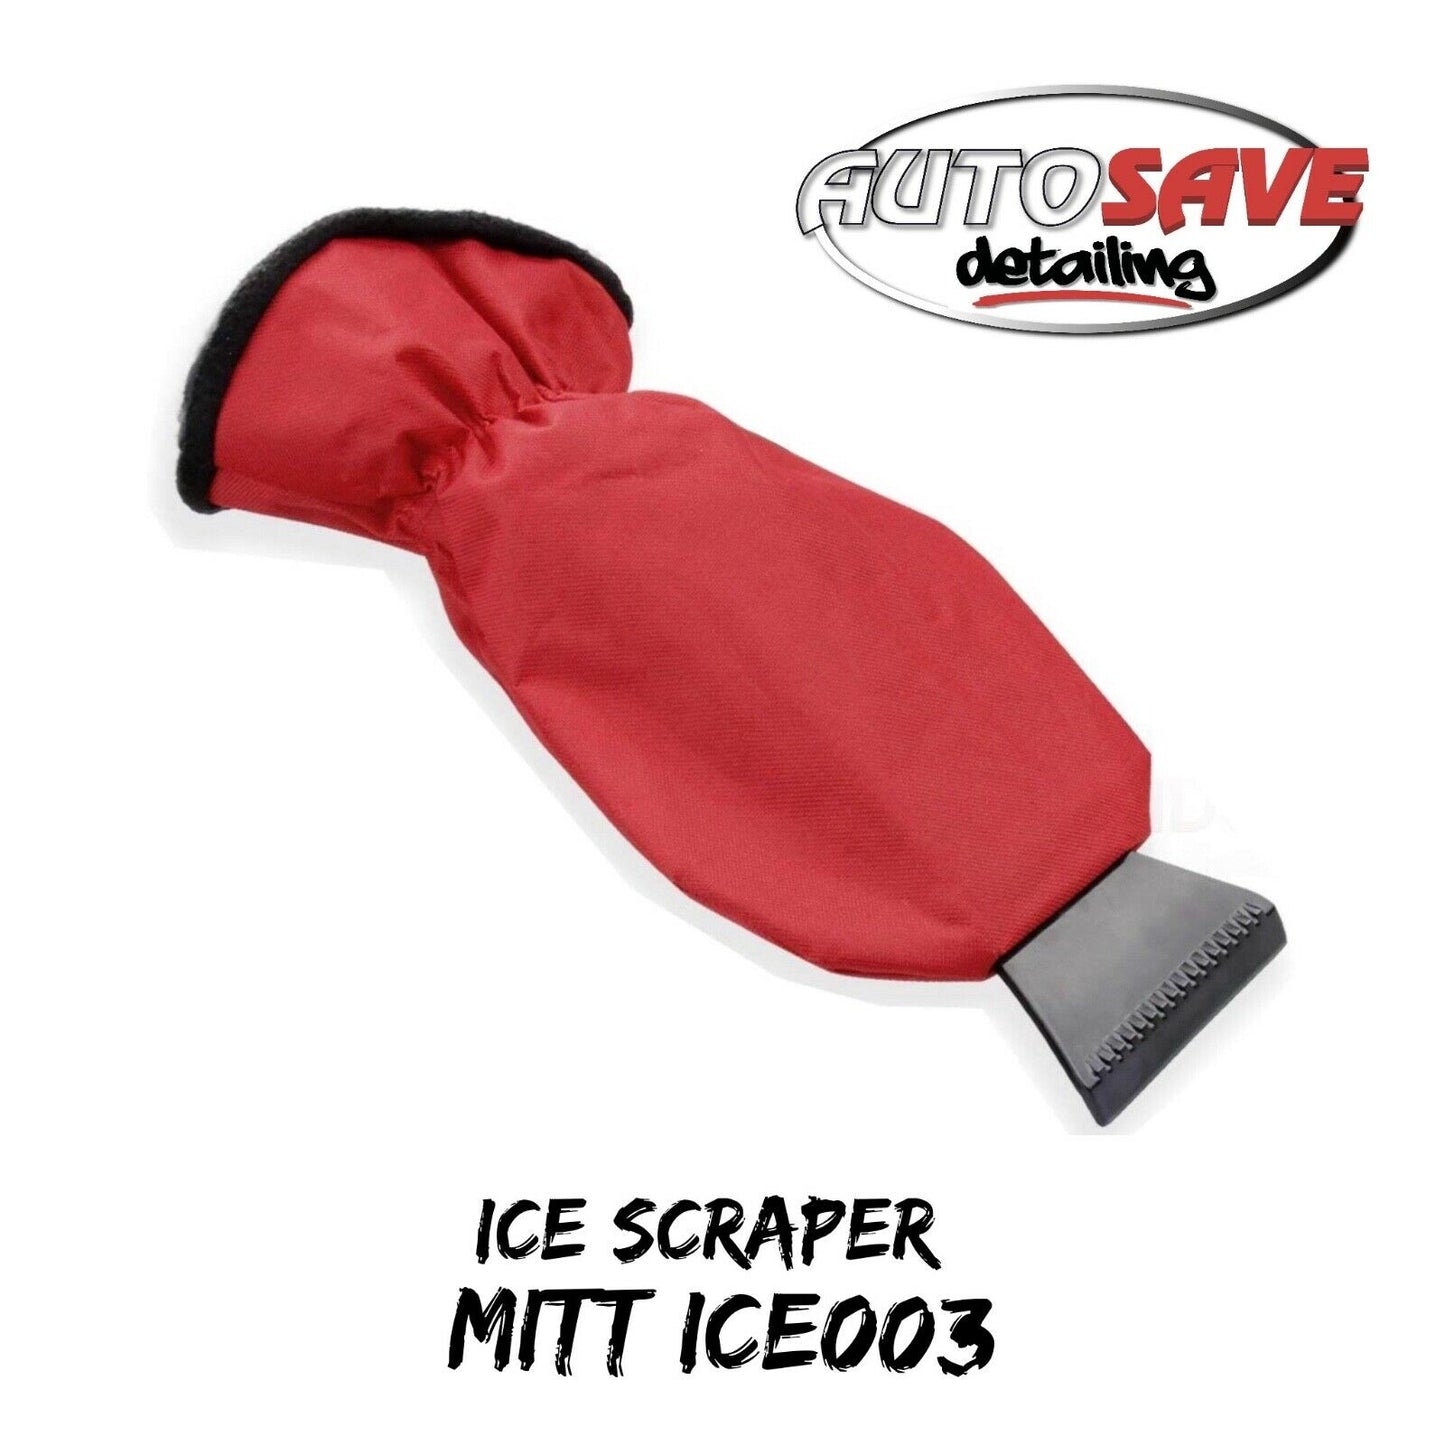 Simply Deluxe Ice Scraper w/ Fleece Glove ICE003 Removes Ice Snow Frost